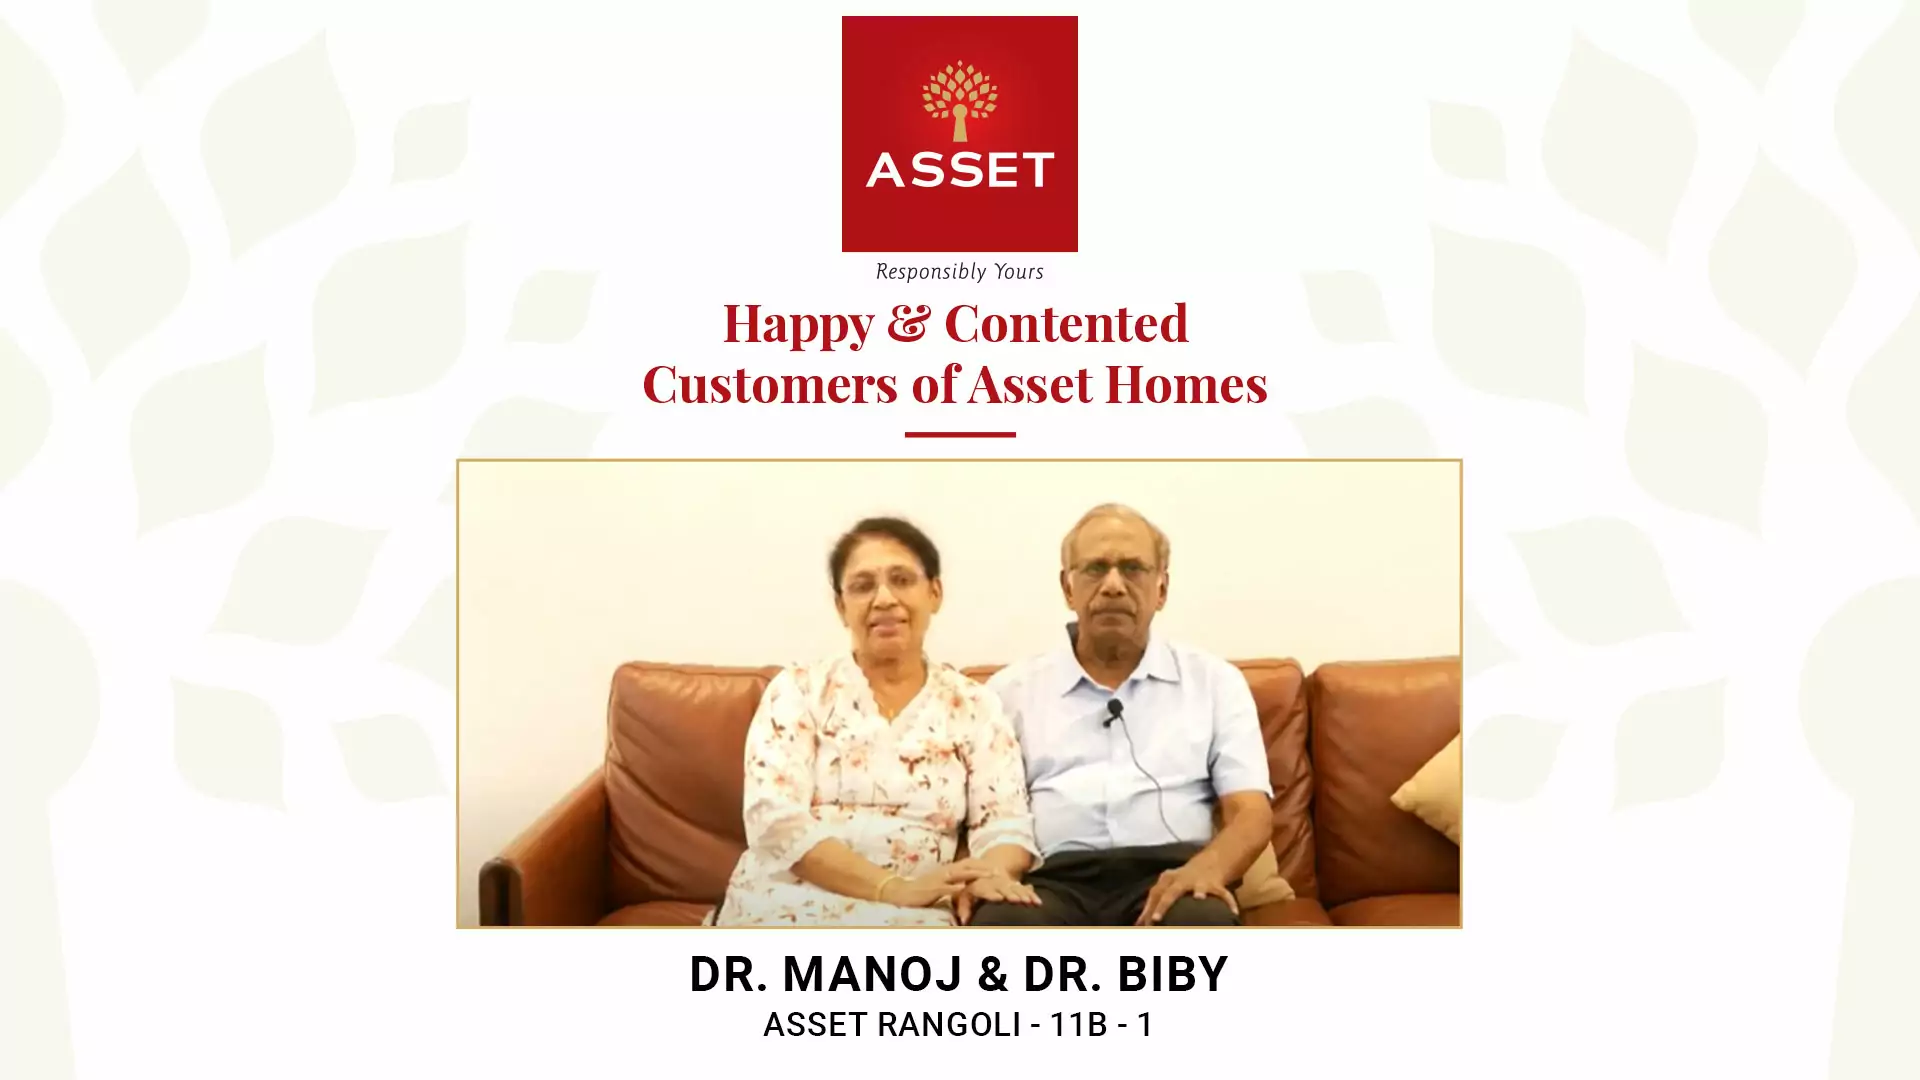 Dr. Manoj & Dr. Biby, Asset Rangoli – 11B1